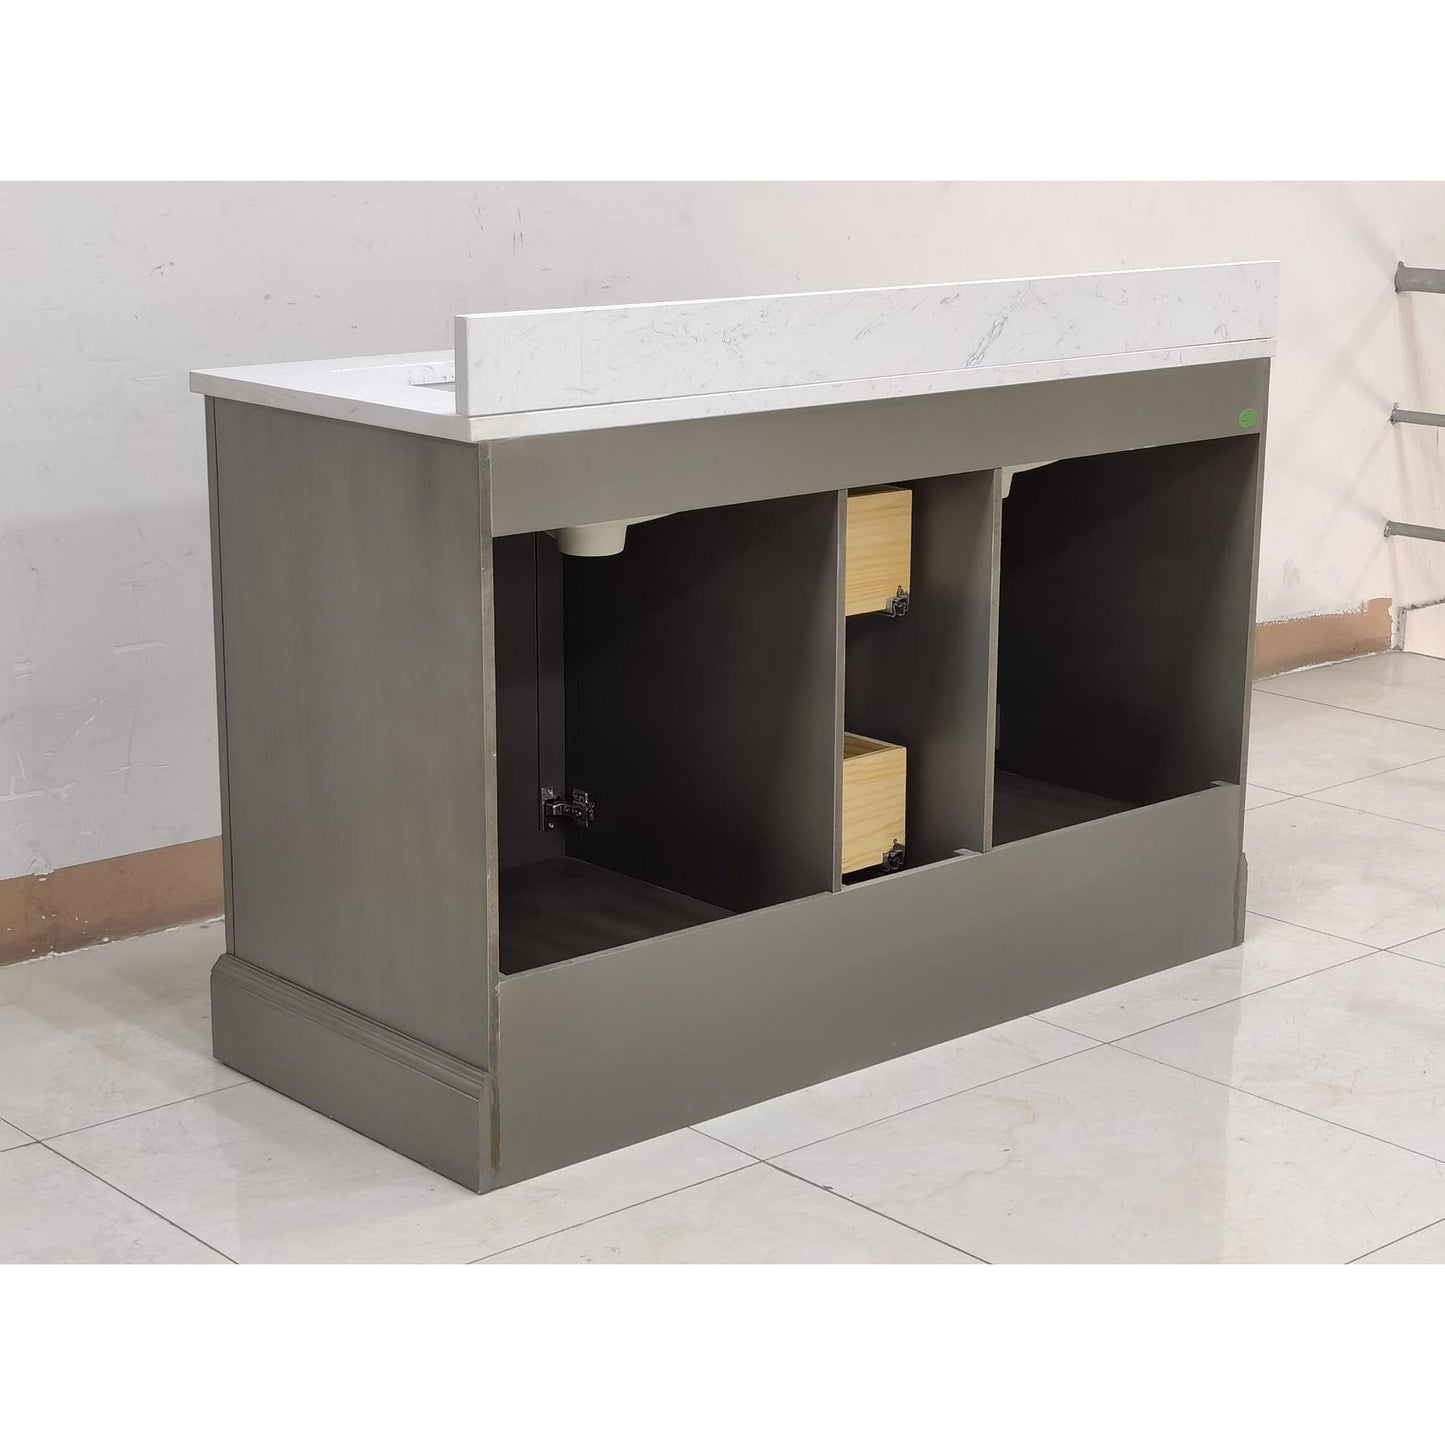 Vanity Art Vannes 54" Double Silver Gray Freestanding Vanity Set With Engineered Marble Countertop and Integrated Sink